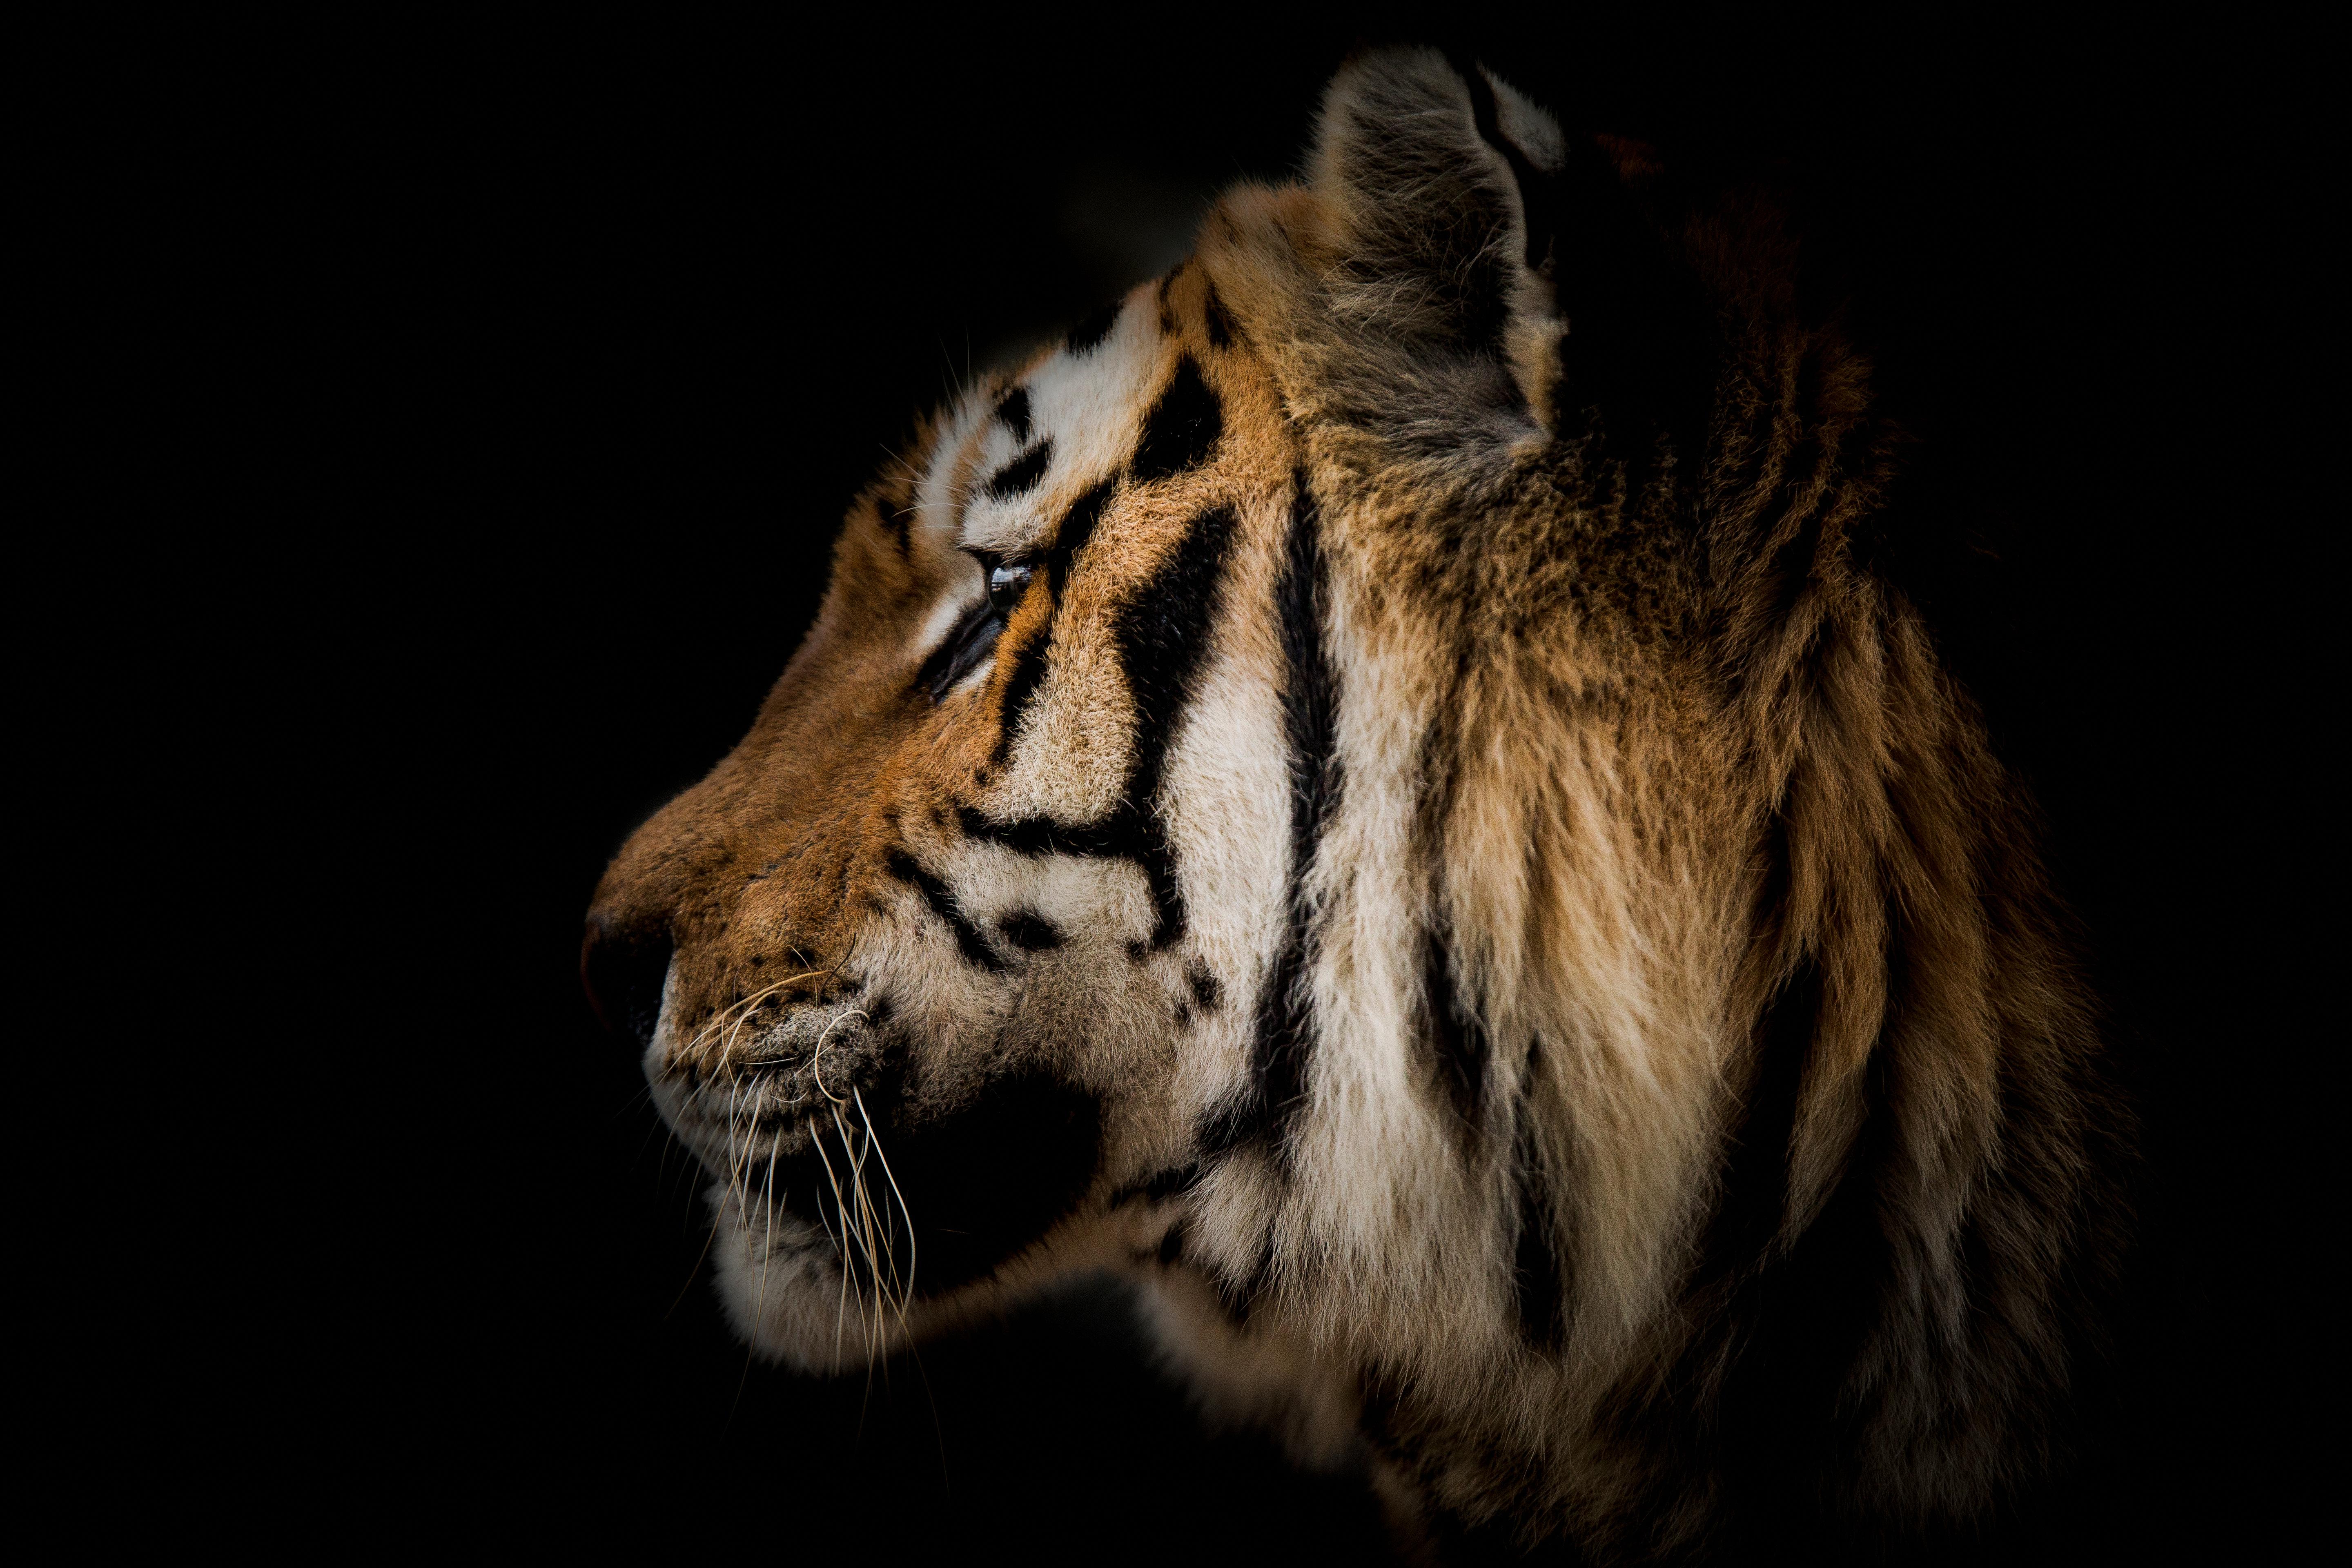 Shane Russeck Animal Print - 36x48 Tiger Photography Wildlife Art Photograph "Tiger Portrait" Unsigned Print